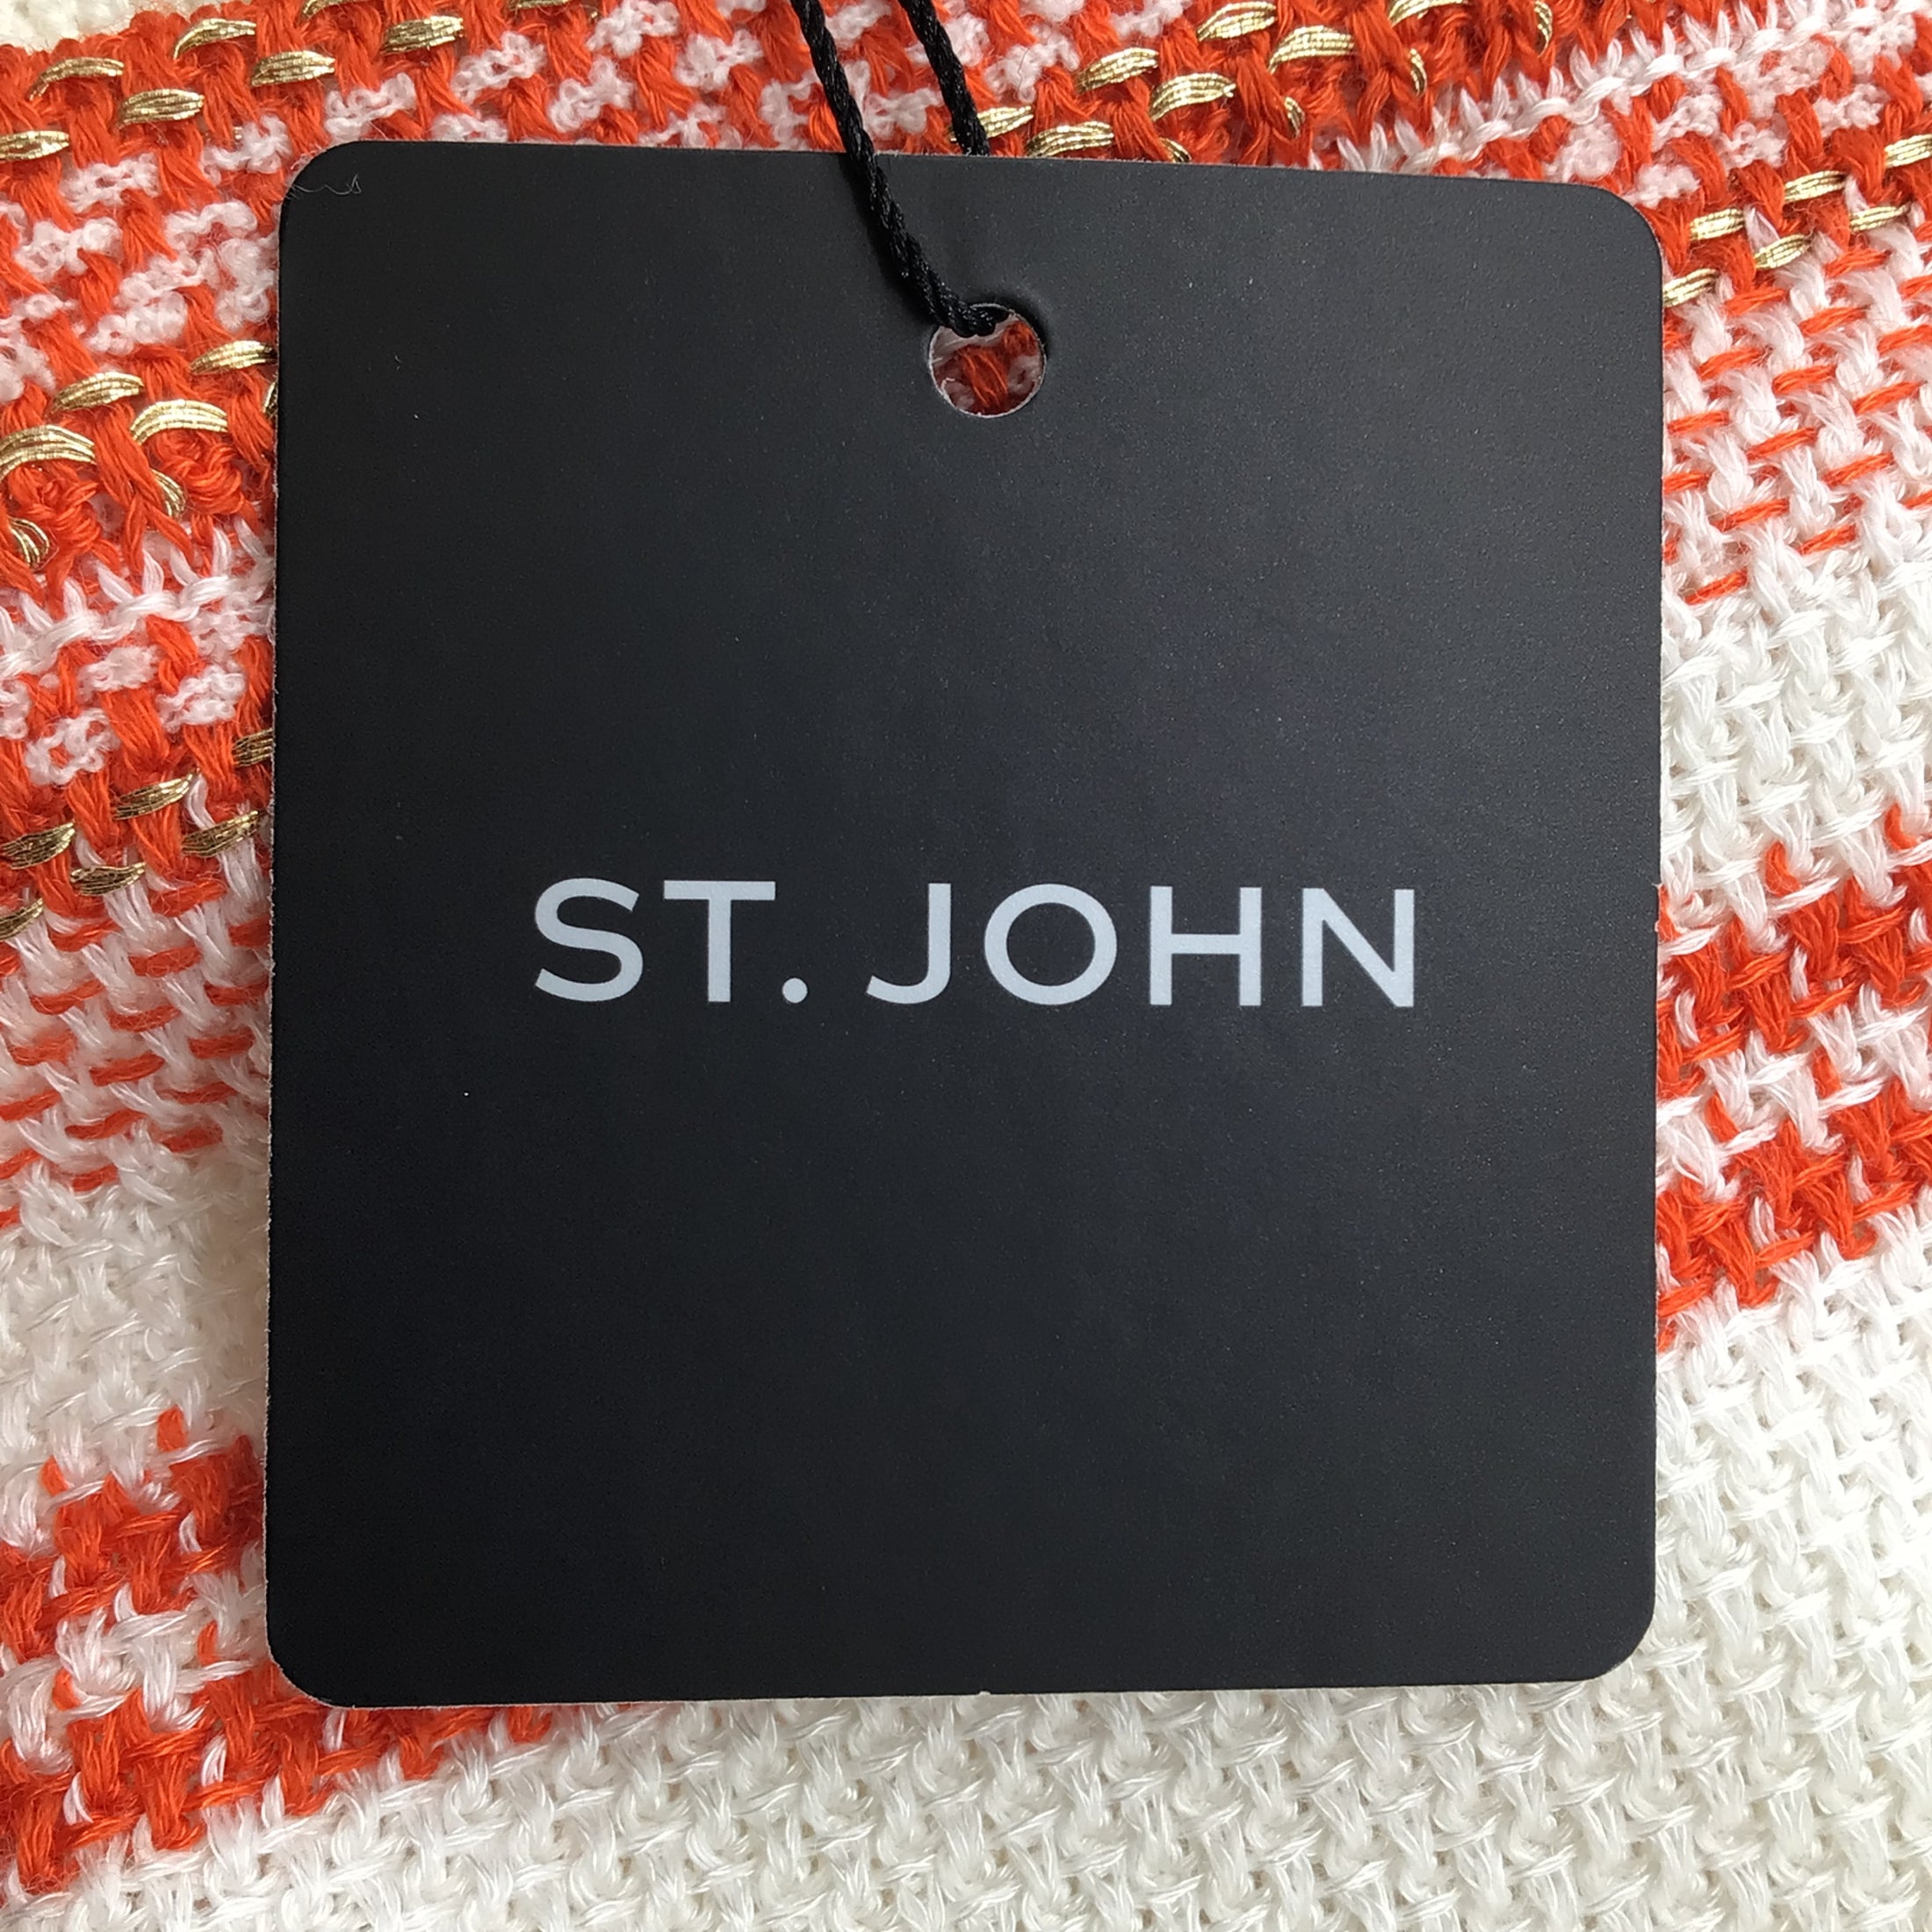 St. John Ivory / Orange Stripe Knit Jacket